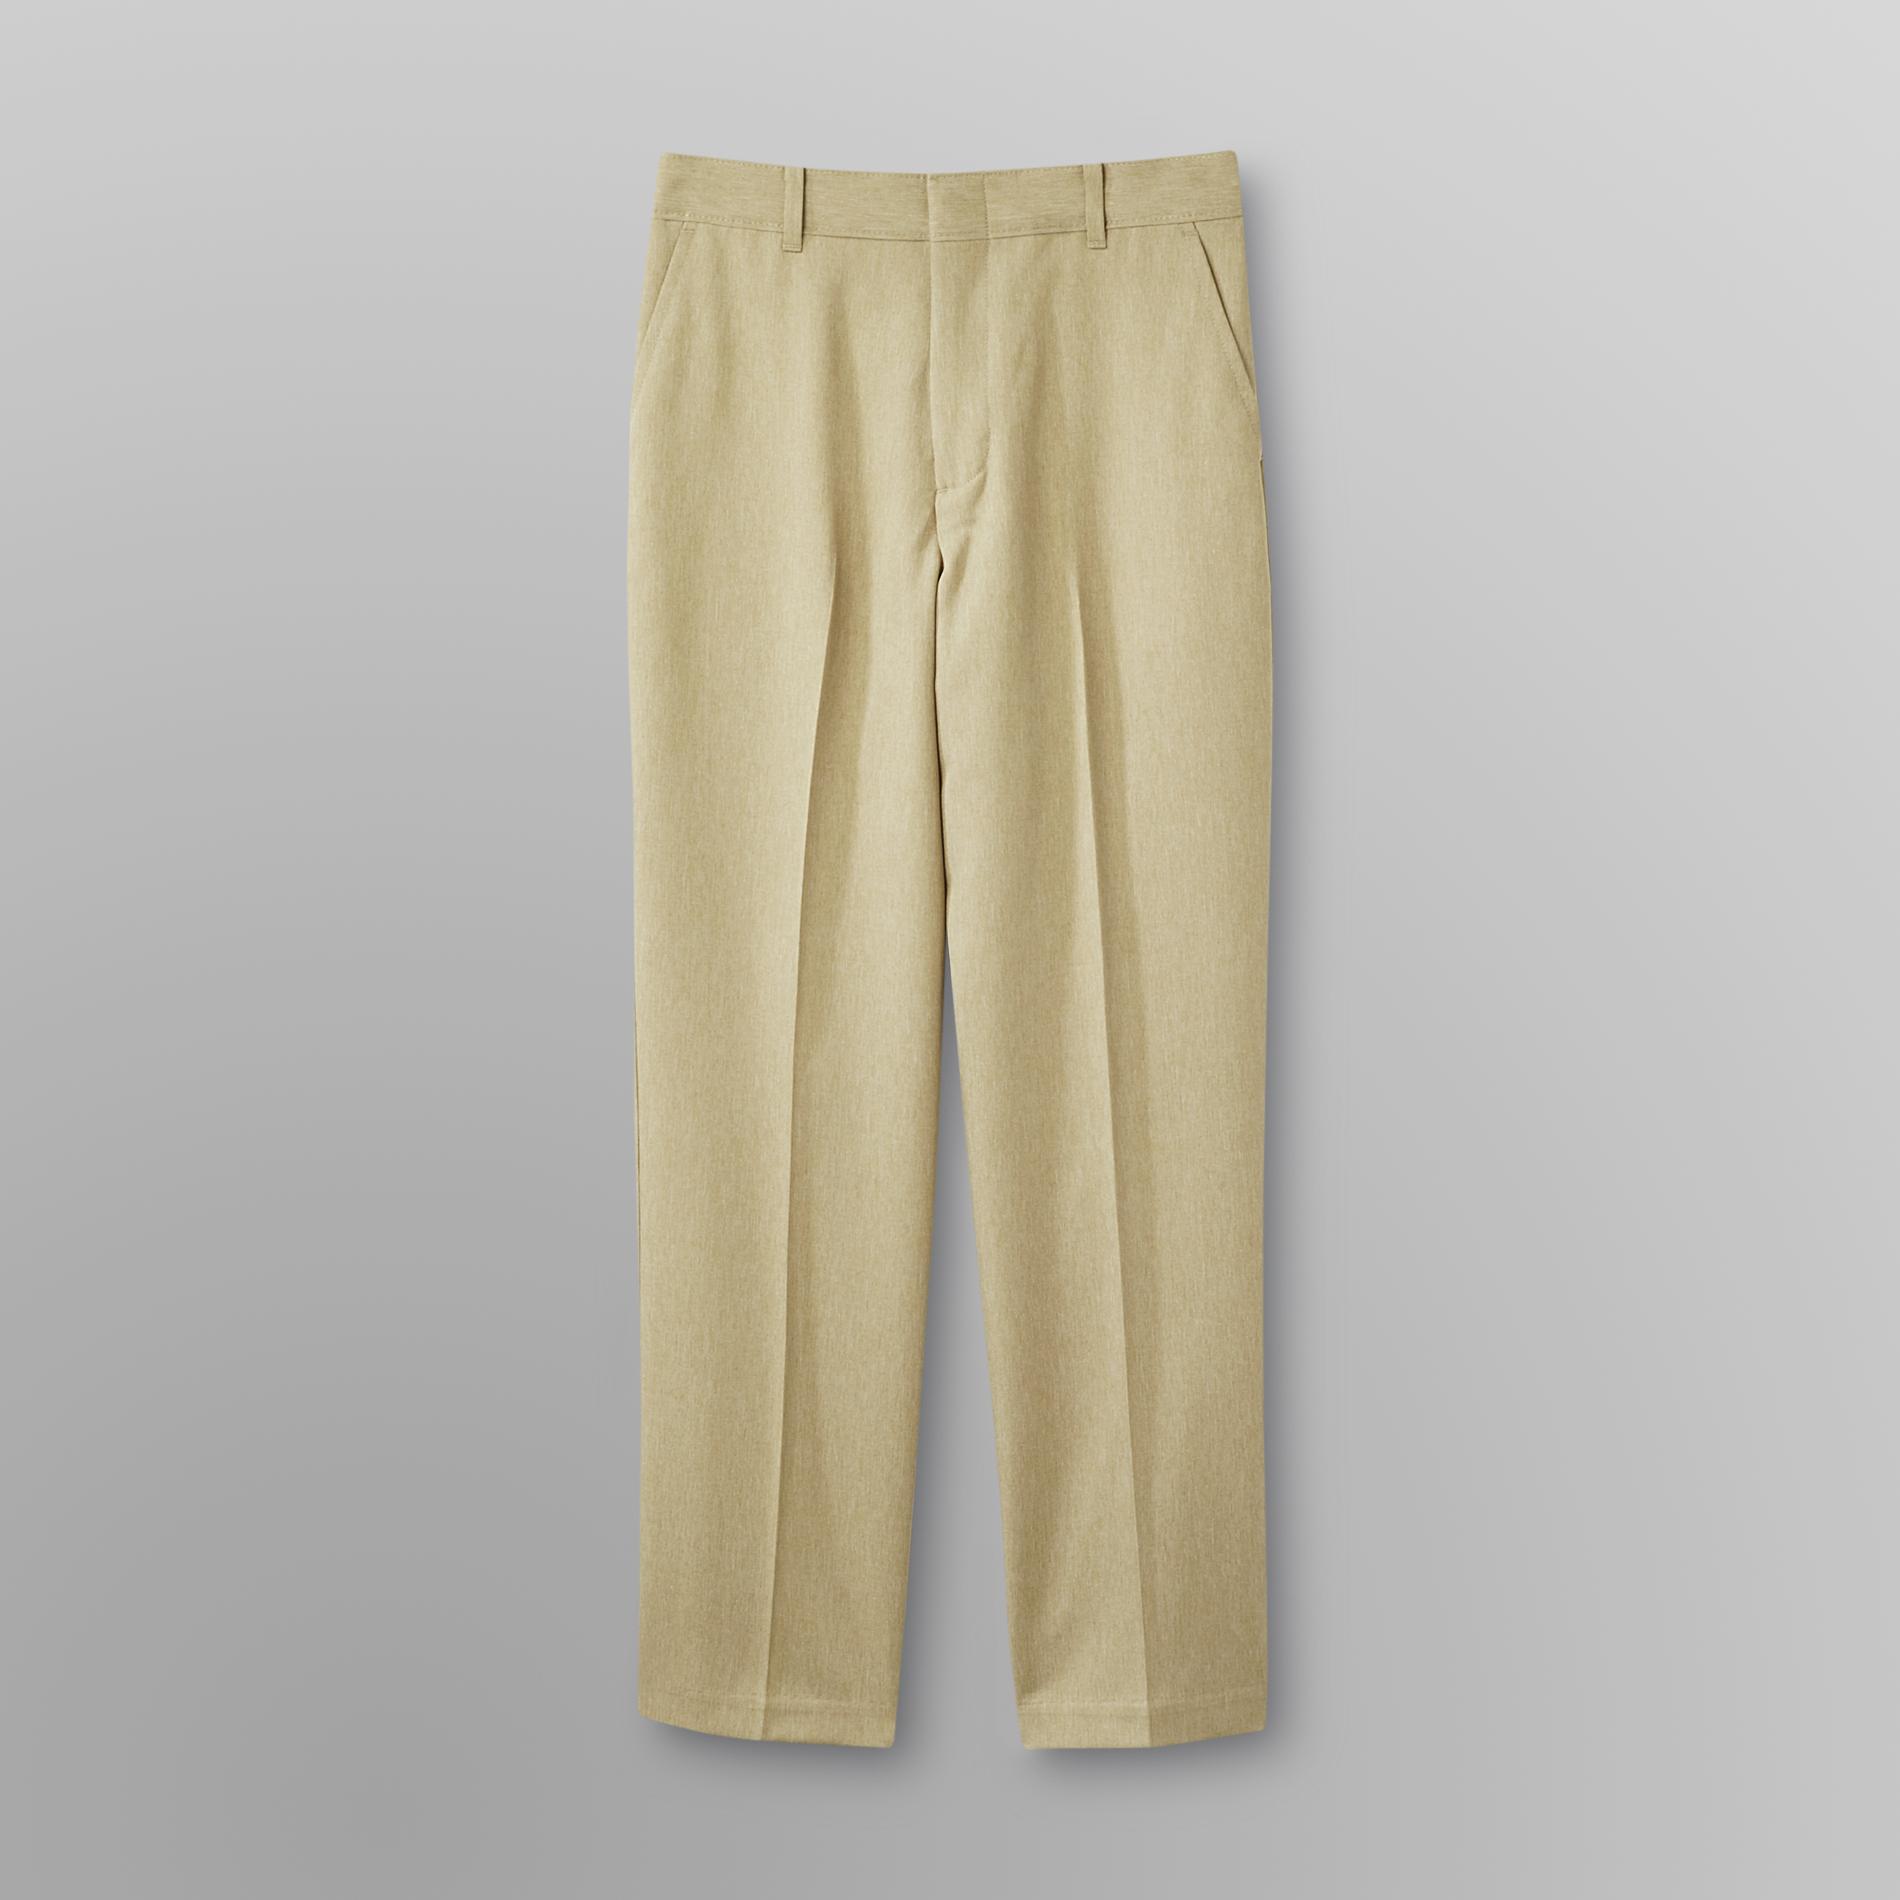 Holiday Editions Boy's Khaki Pants